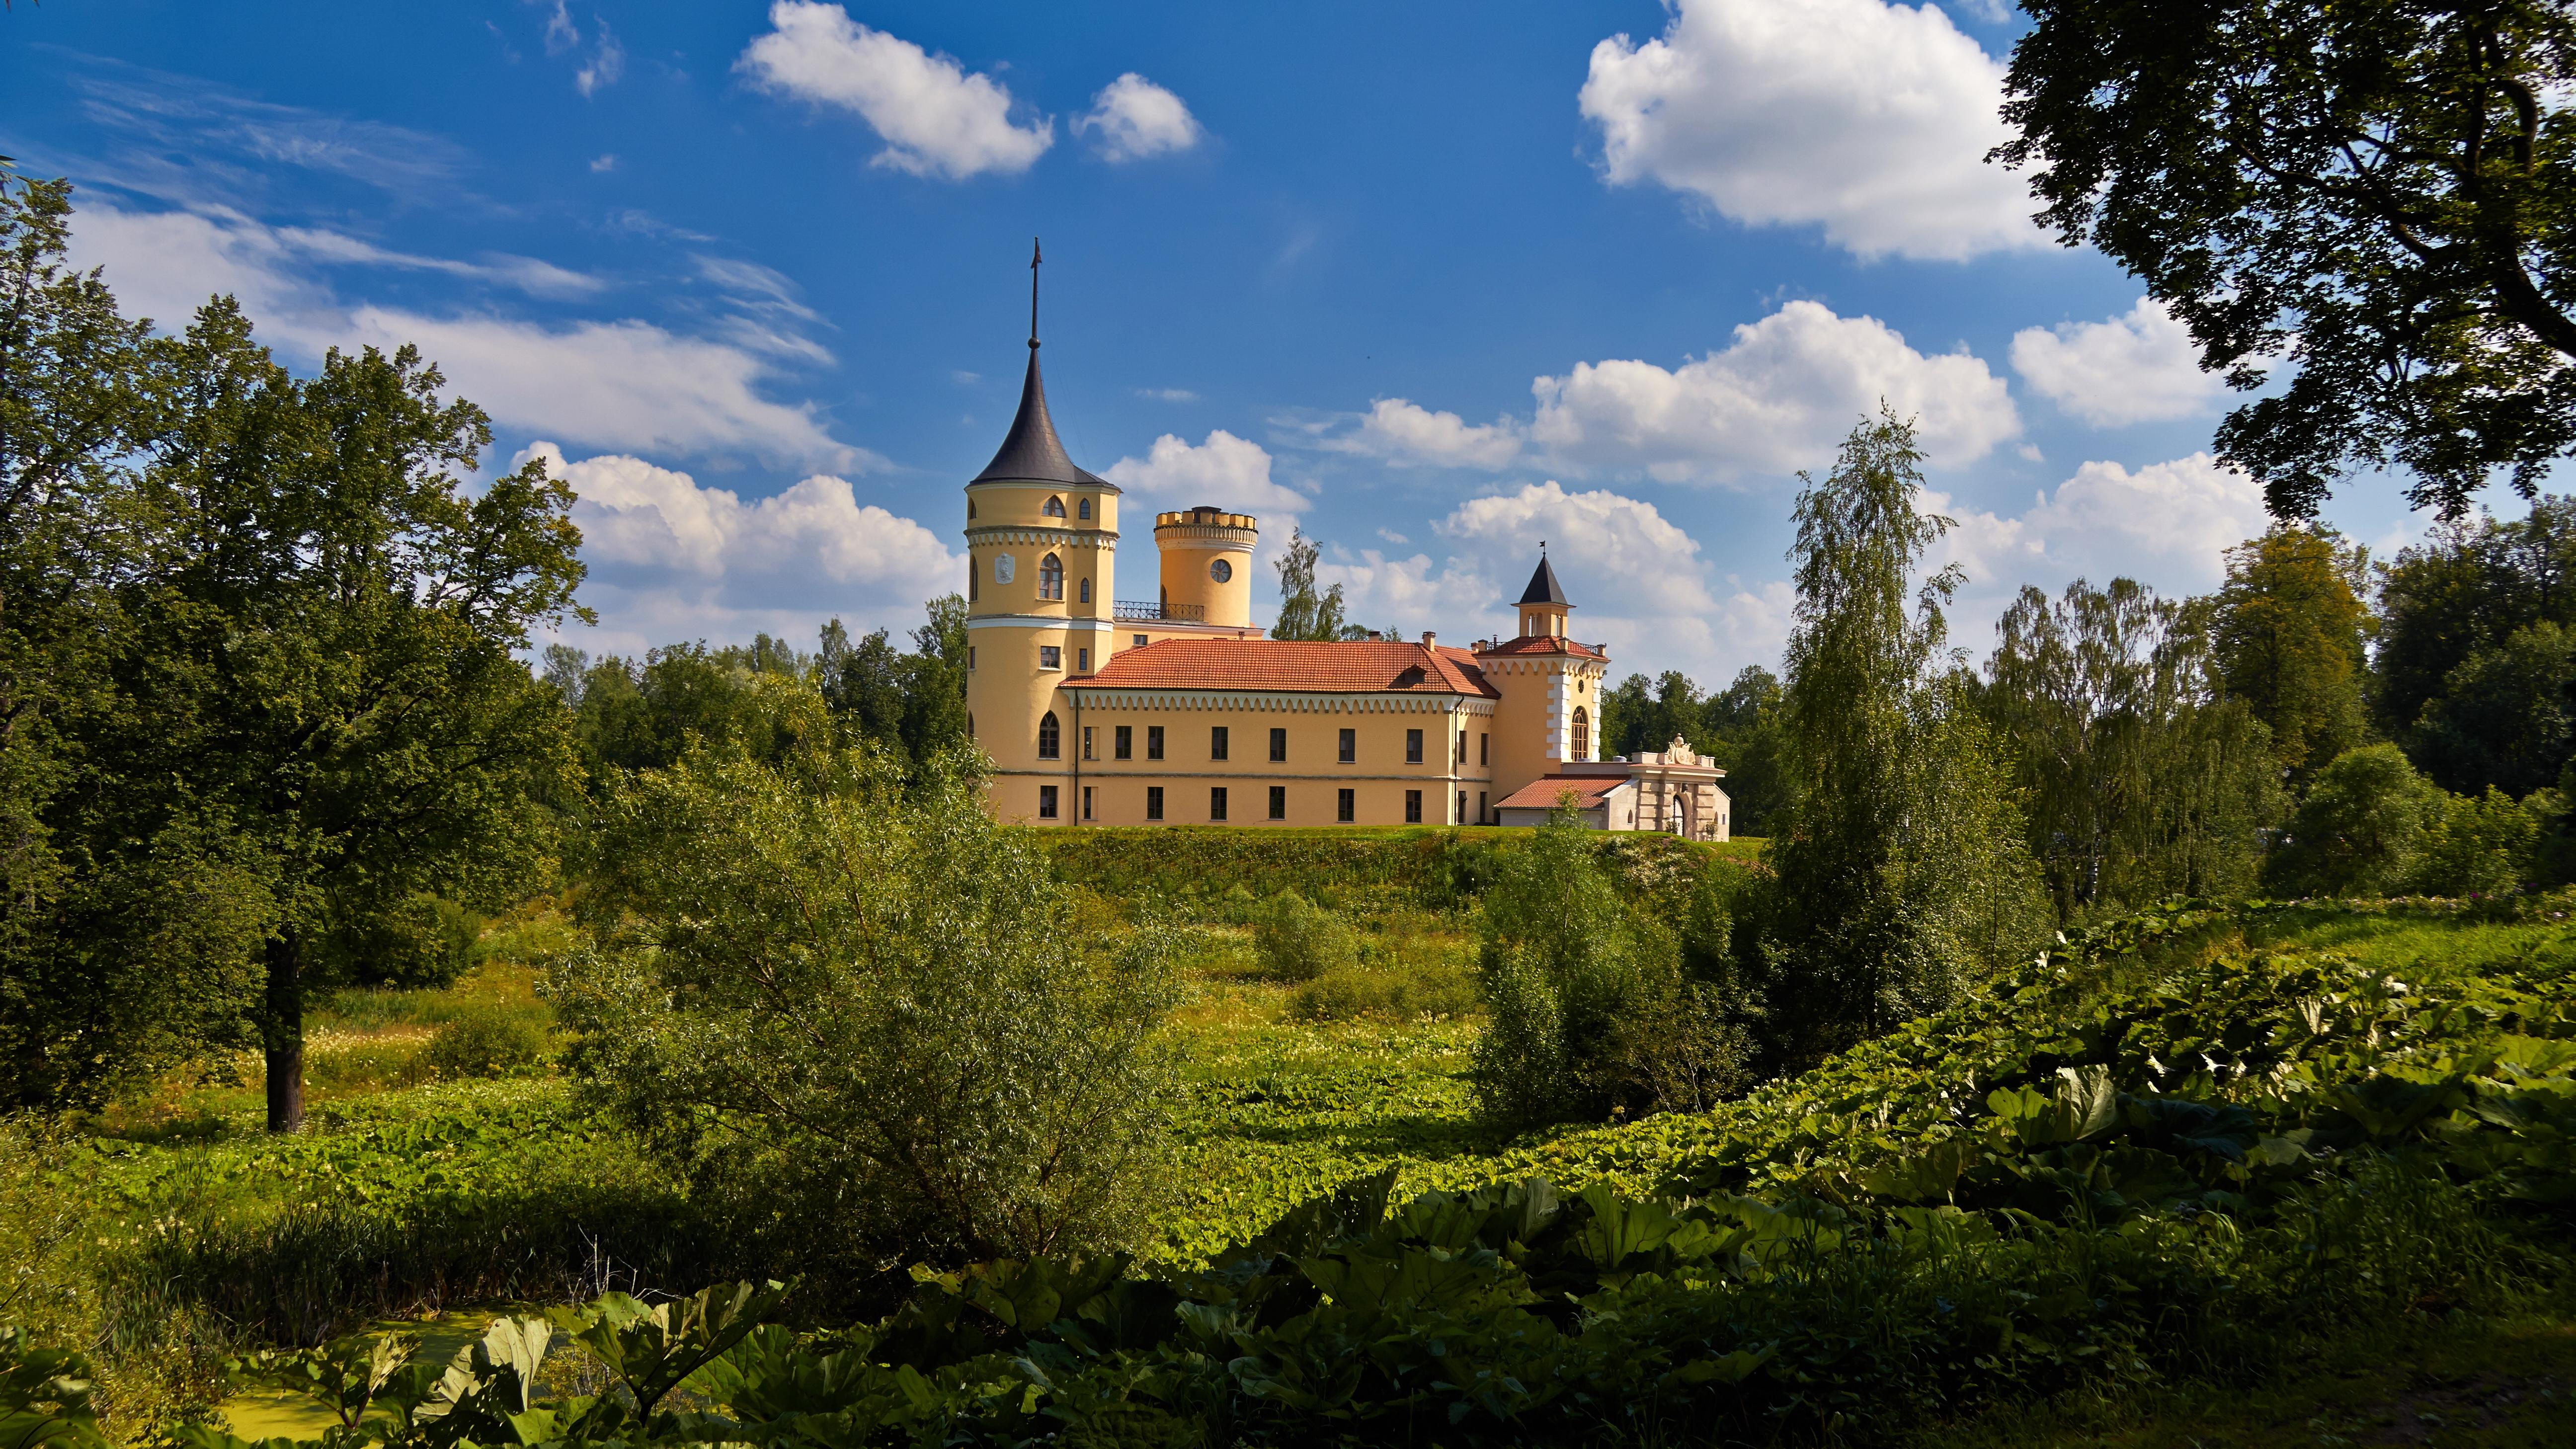 Обои Saint-Petersburg Pavlovsk Park Castle Mariental на рабочий стол